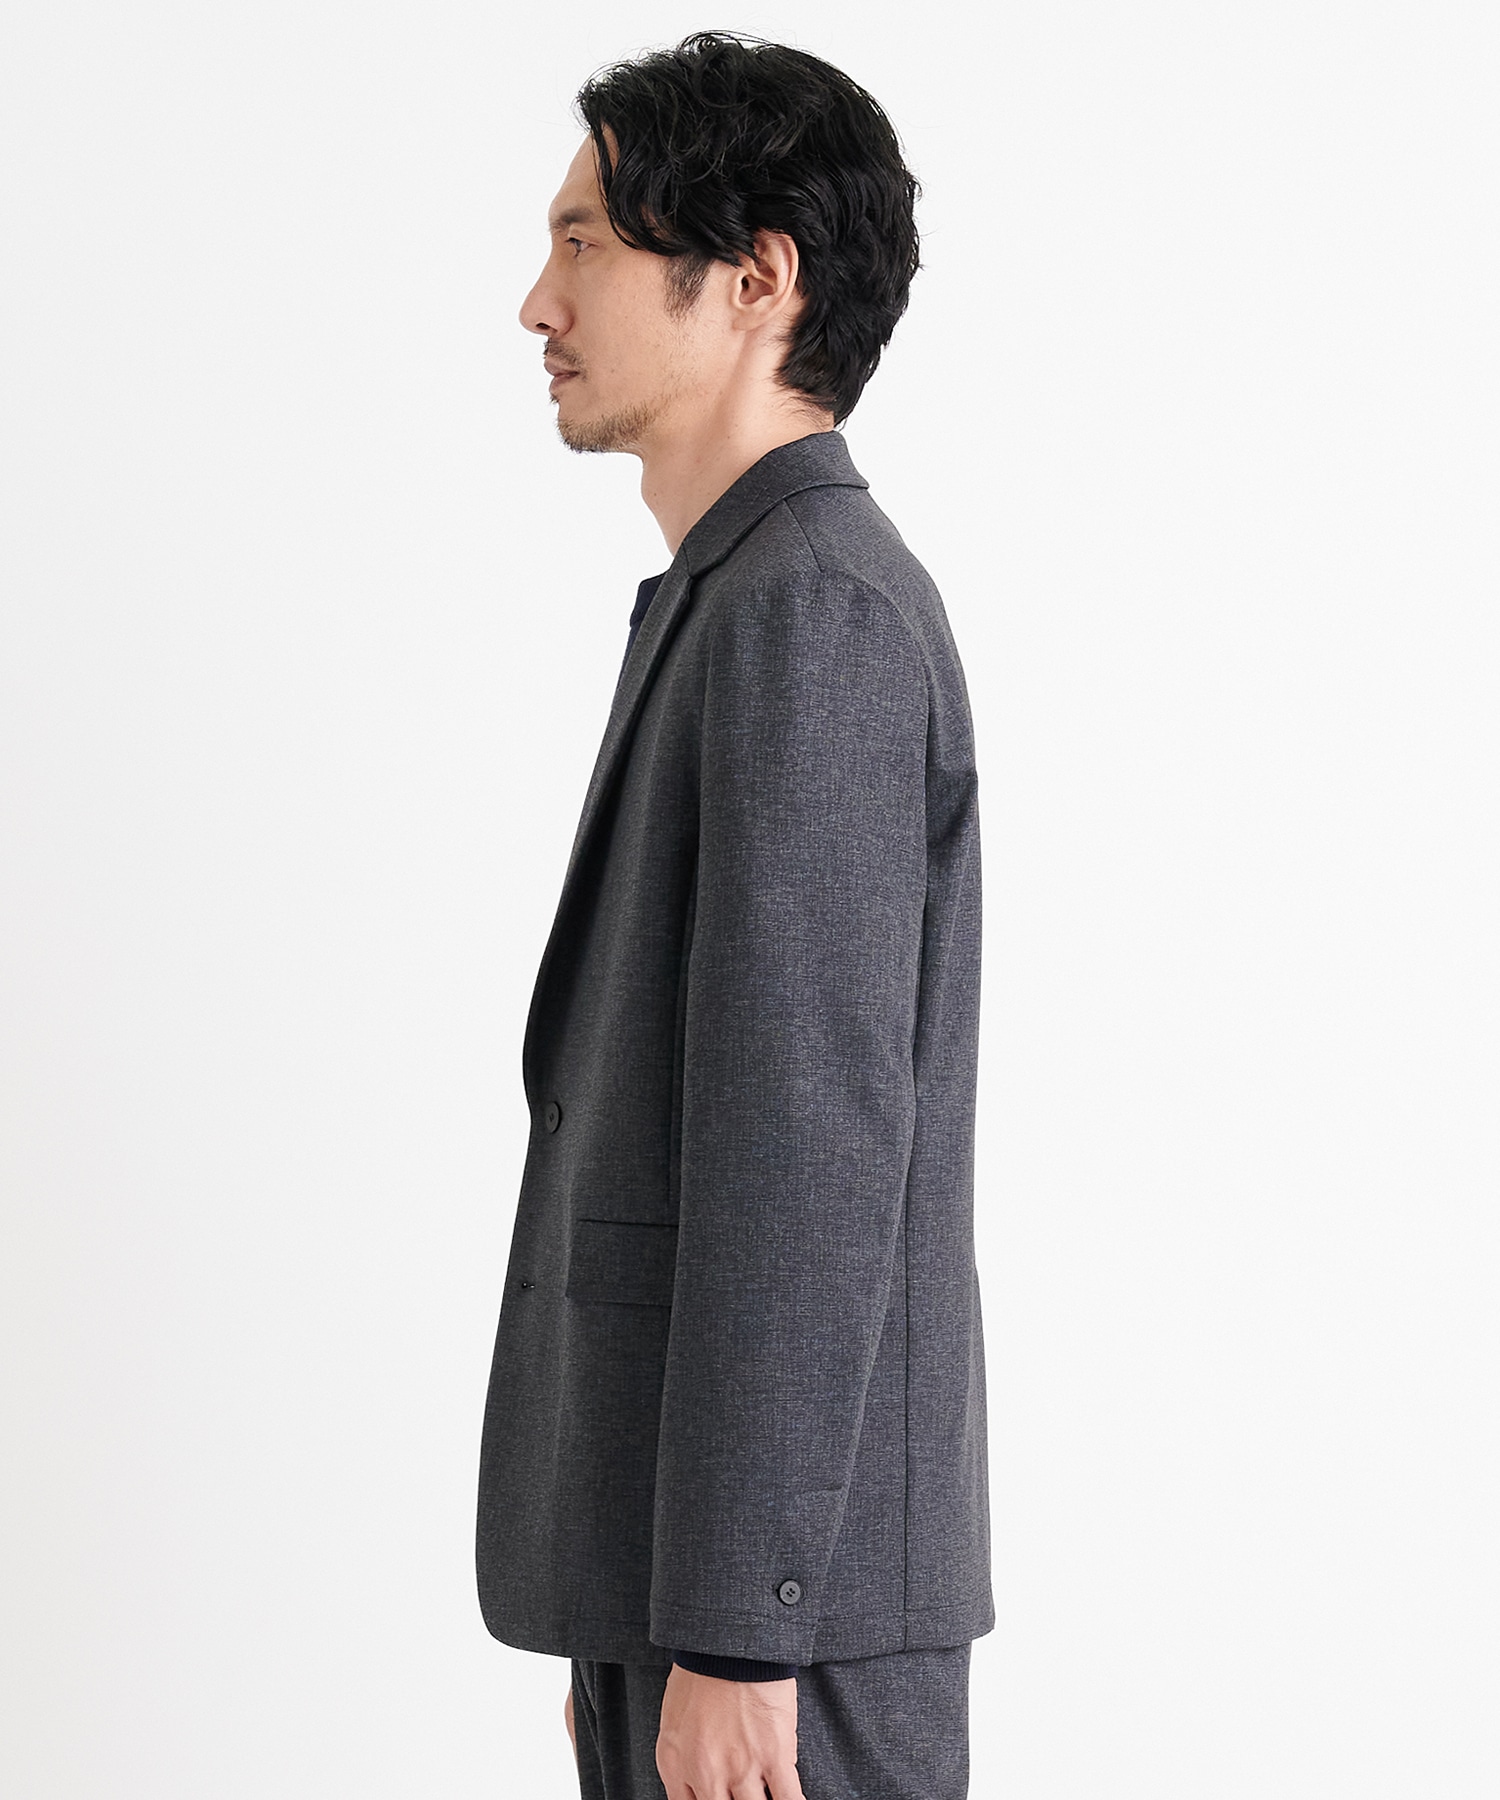 CARREMAN Tweedy Jersey Shape Jacket THE TOKYO